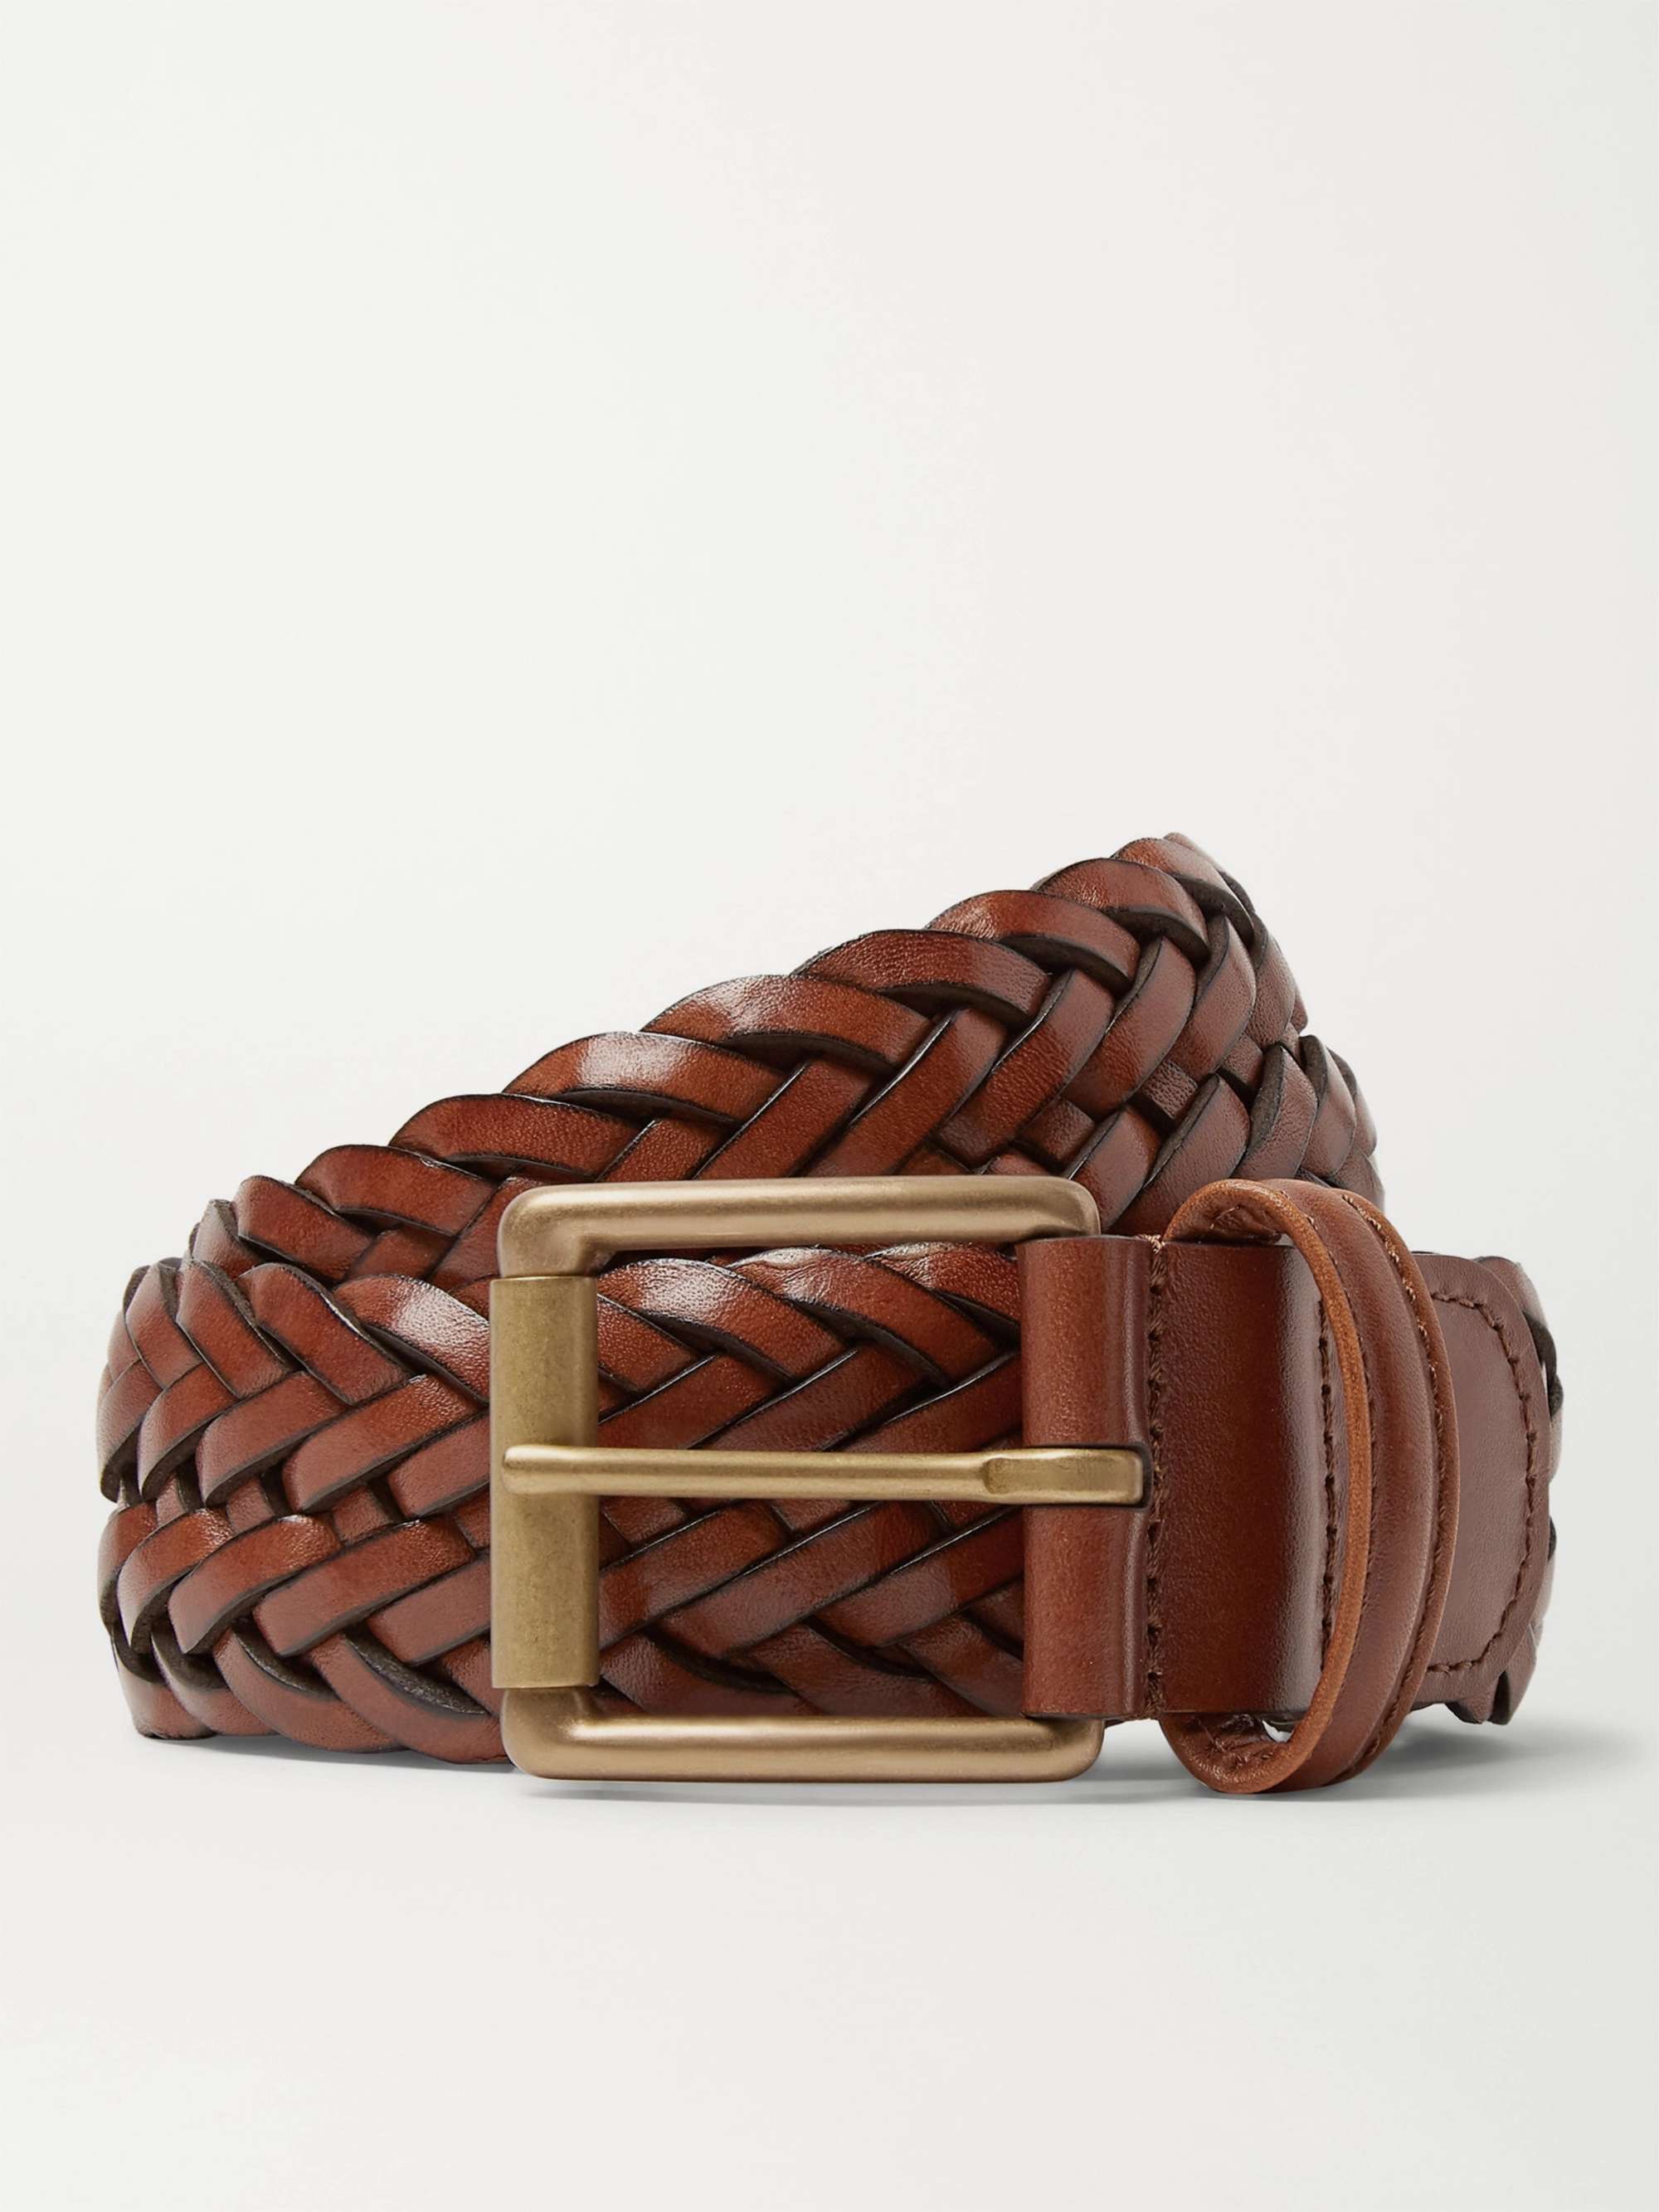 ANDERSON'S 3.5cm Woven Leather Belt for Men | MR PORTER